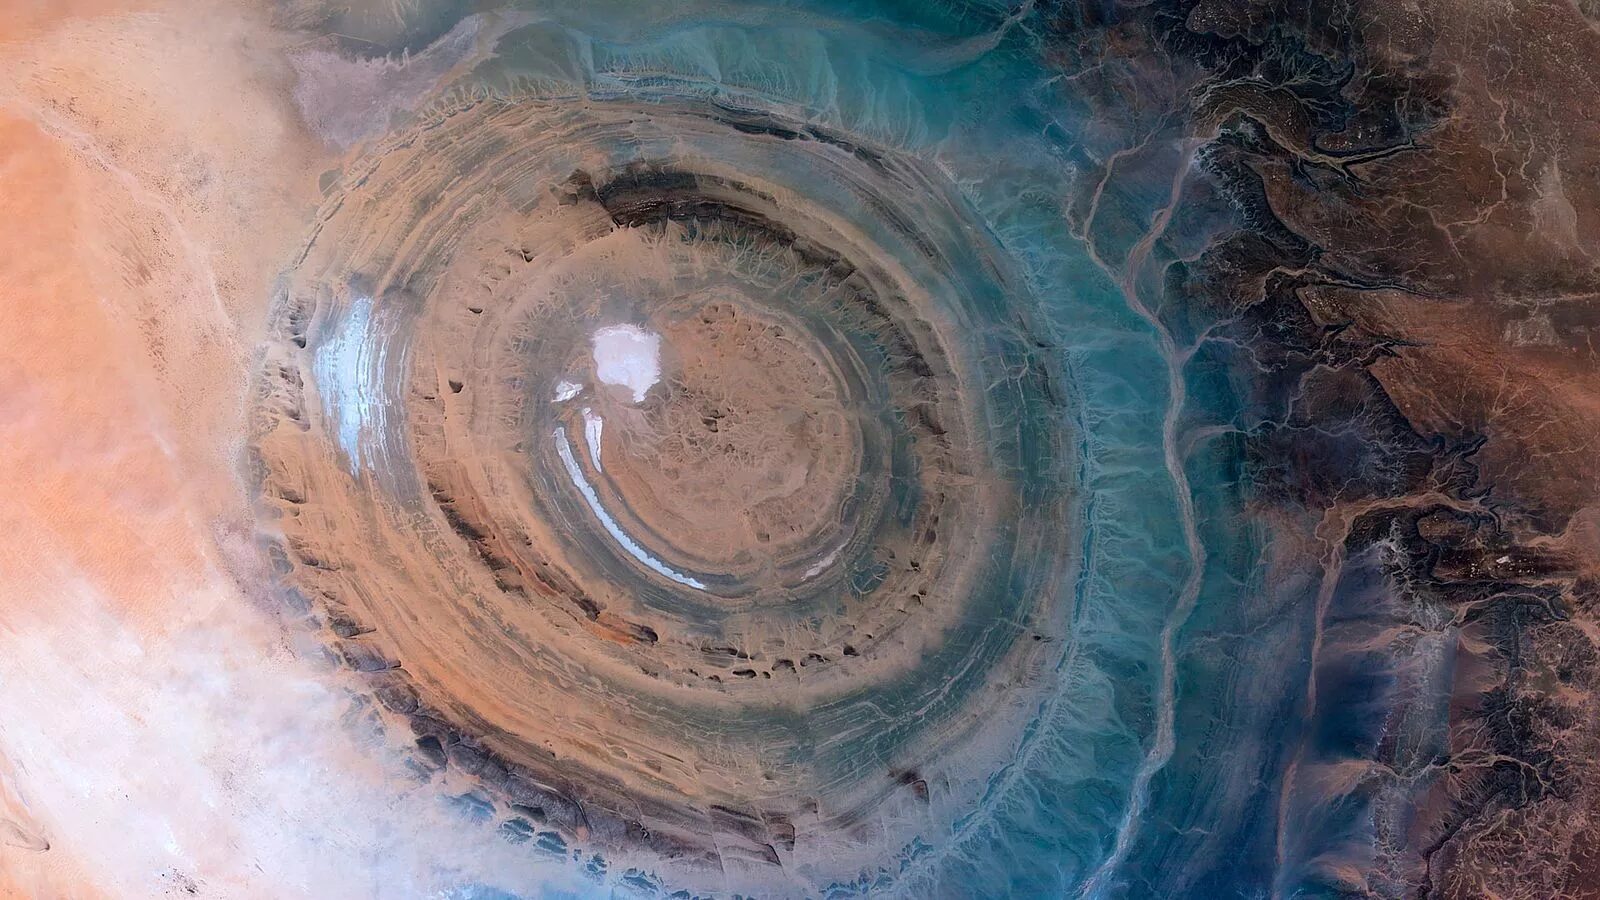 The Eye of the Sahara really looking like an eye.